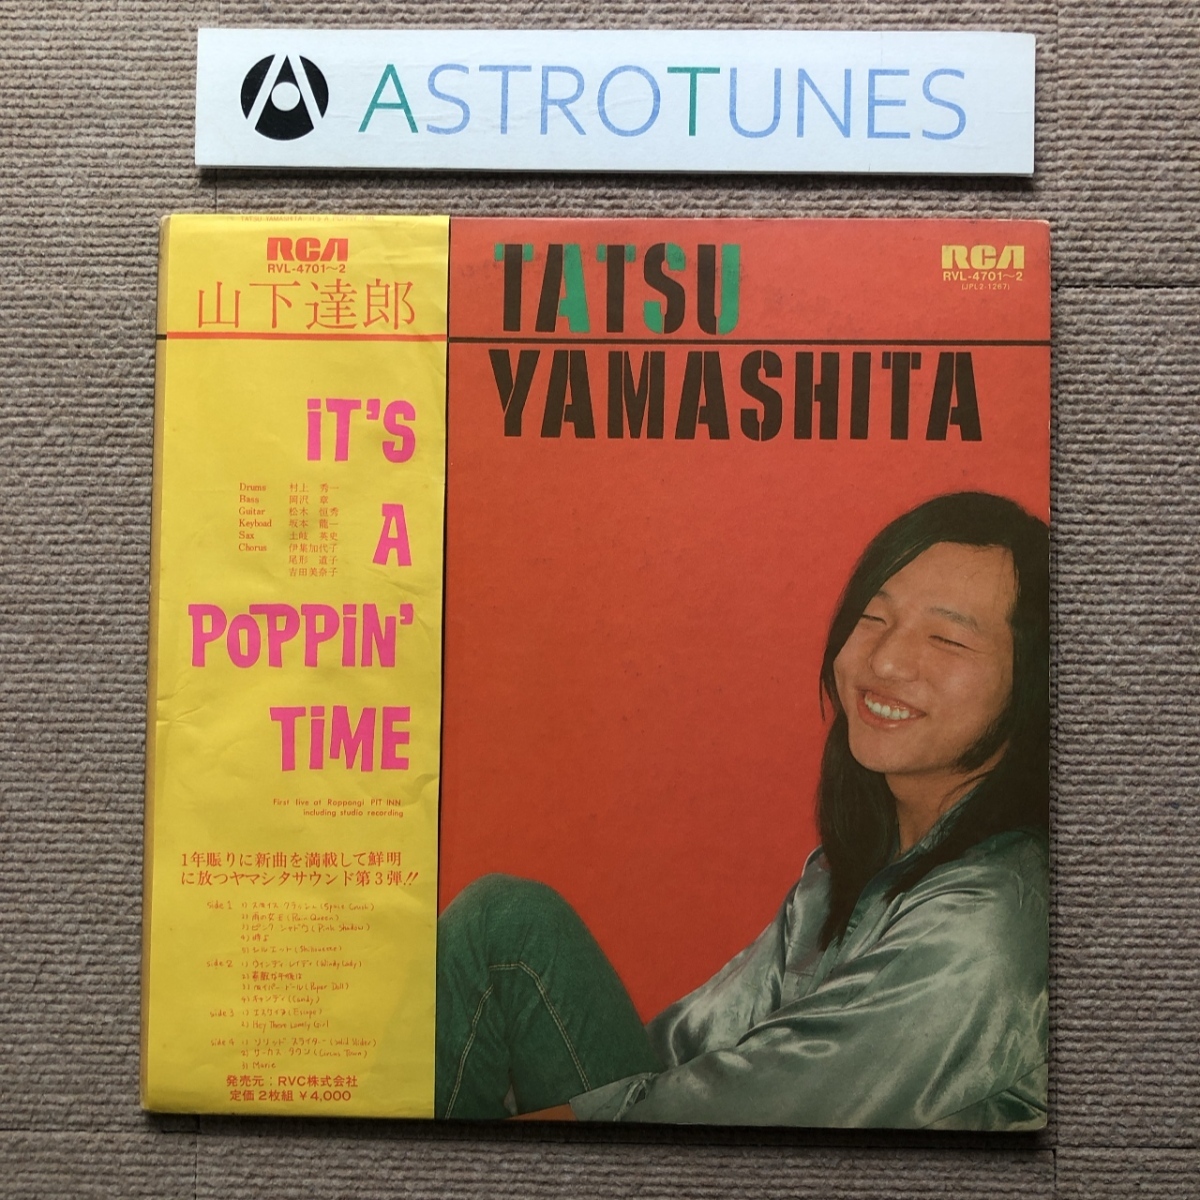 良盤 山下達郎 Tatsuro Yamashita 1978年 2枚組LPレコード It's A Poppin' Time 帯付 City Pop マトall 111 坂本龍一 吉田美奈子 村上秀一_画像1